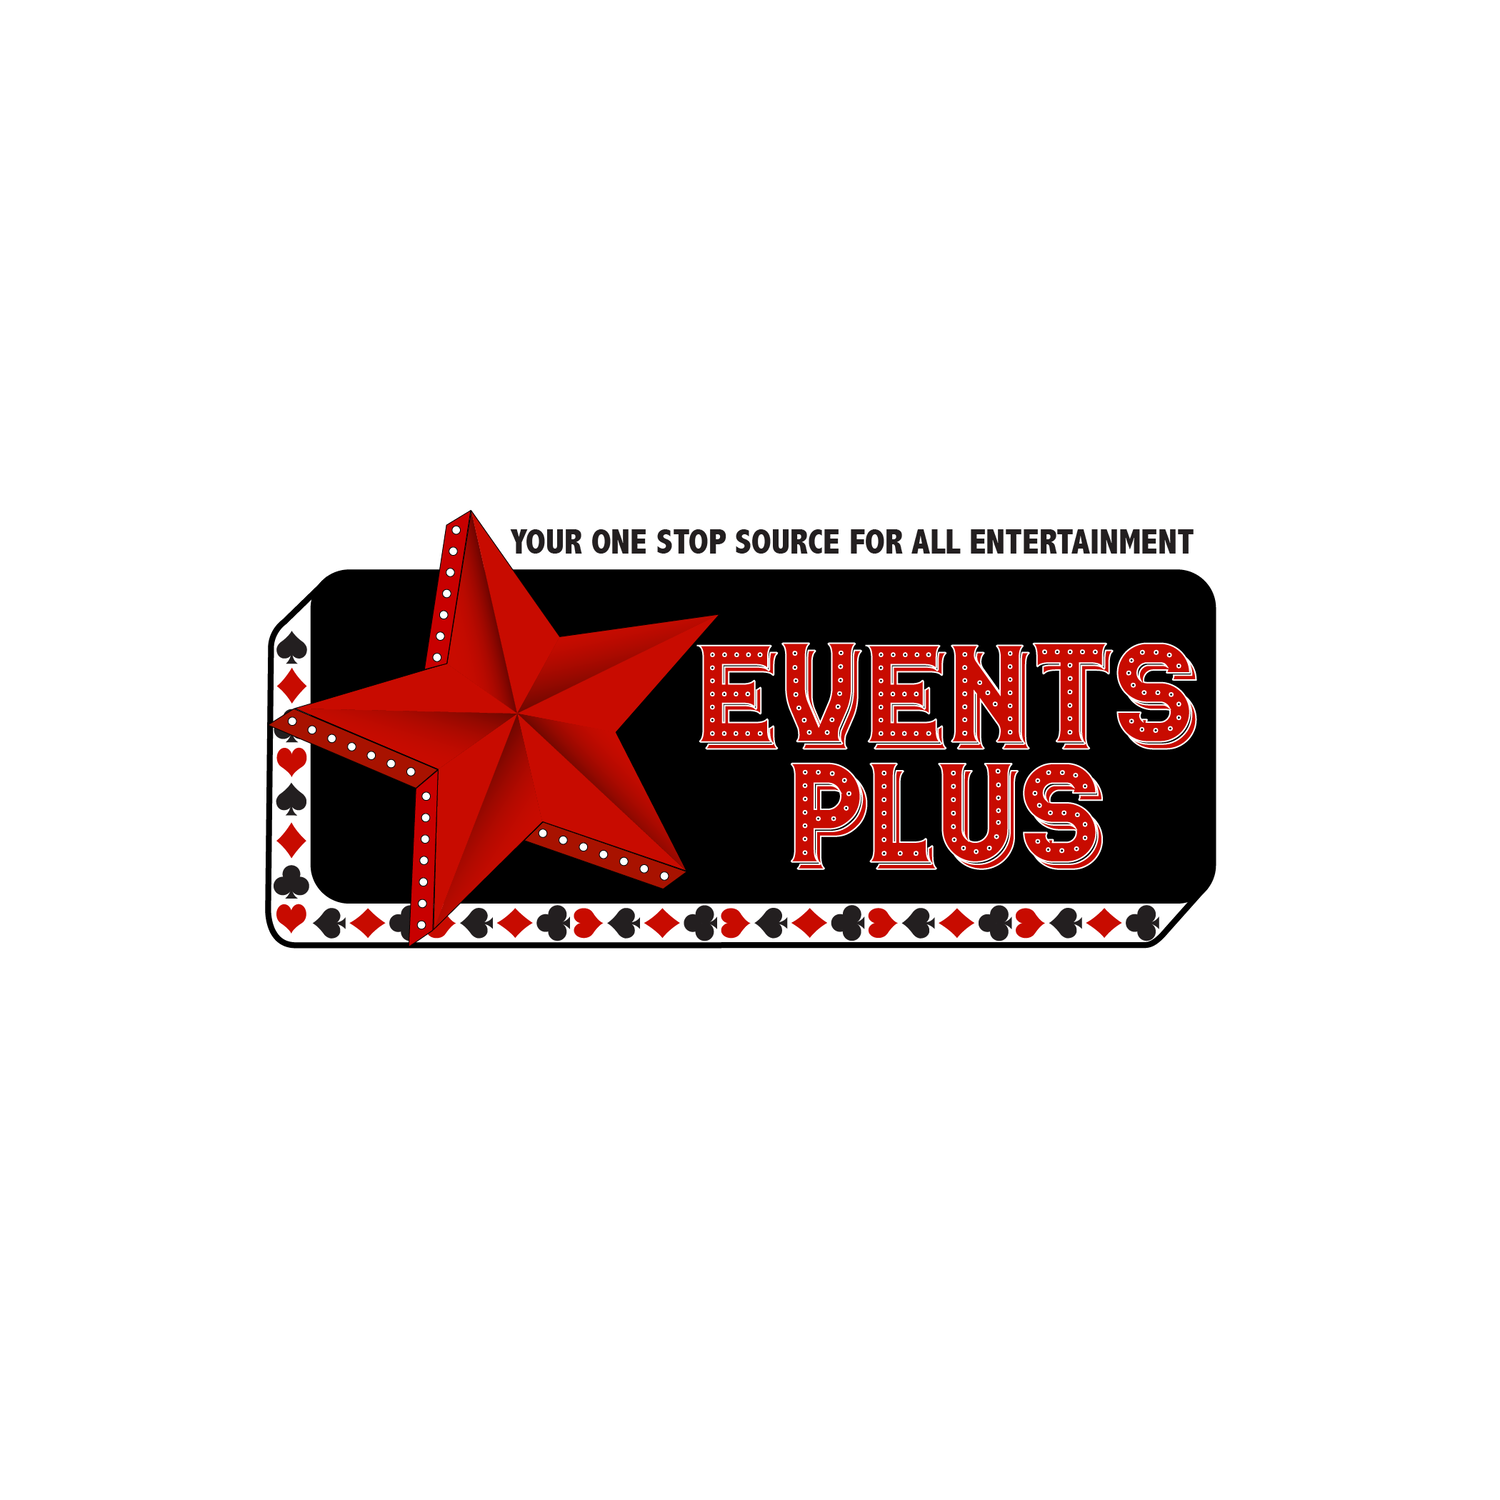 Event's Plus Entertainment